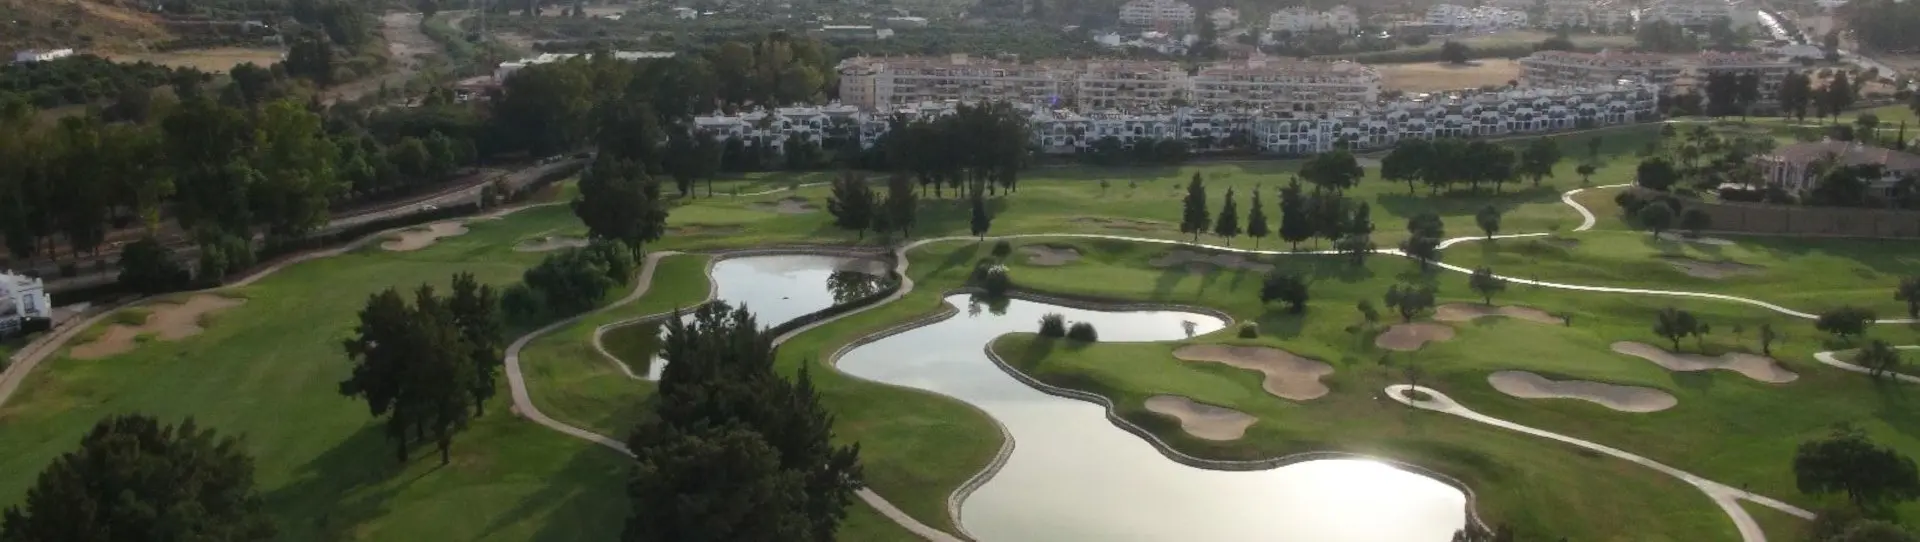 Spain golf courses - Mijas Golf - Los Olivos - Photo 2